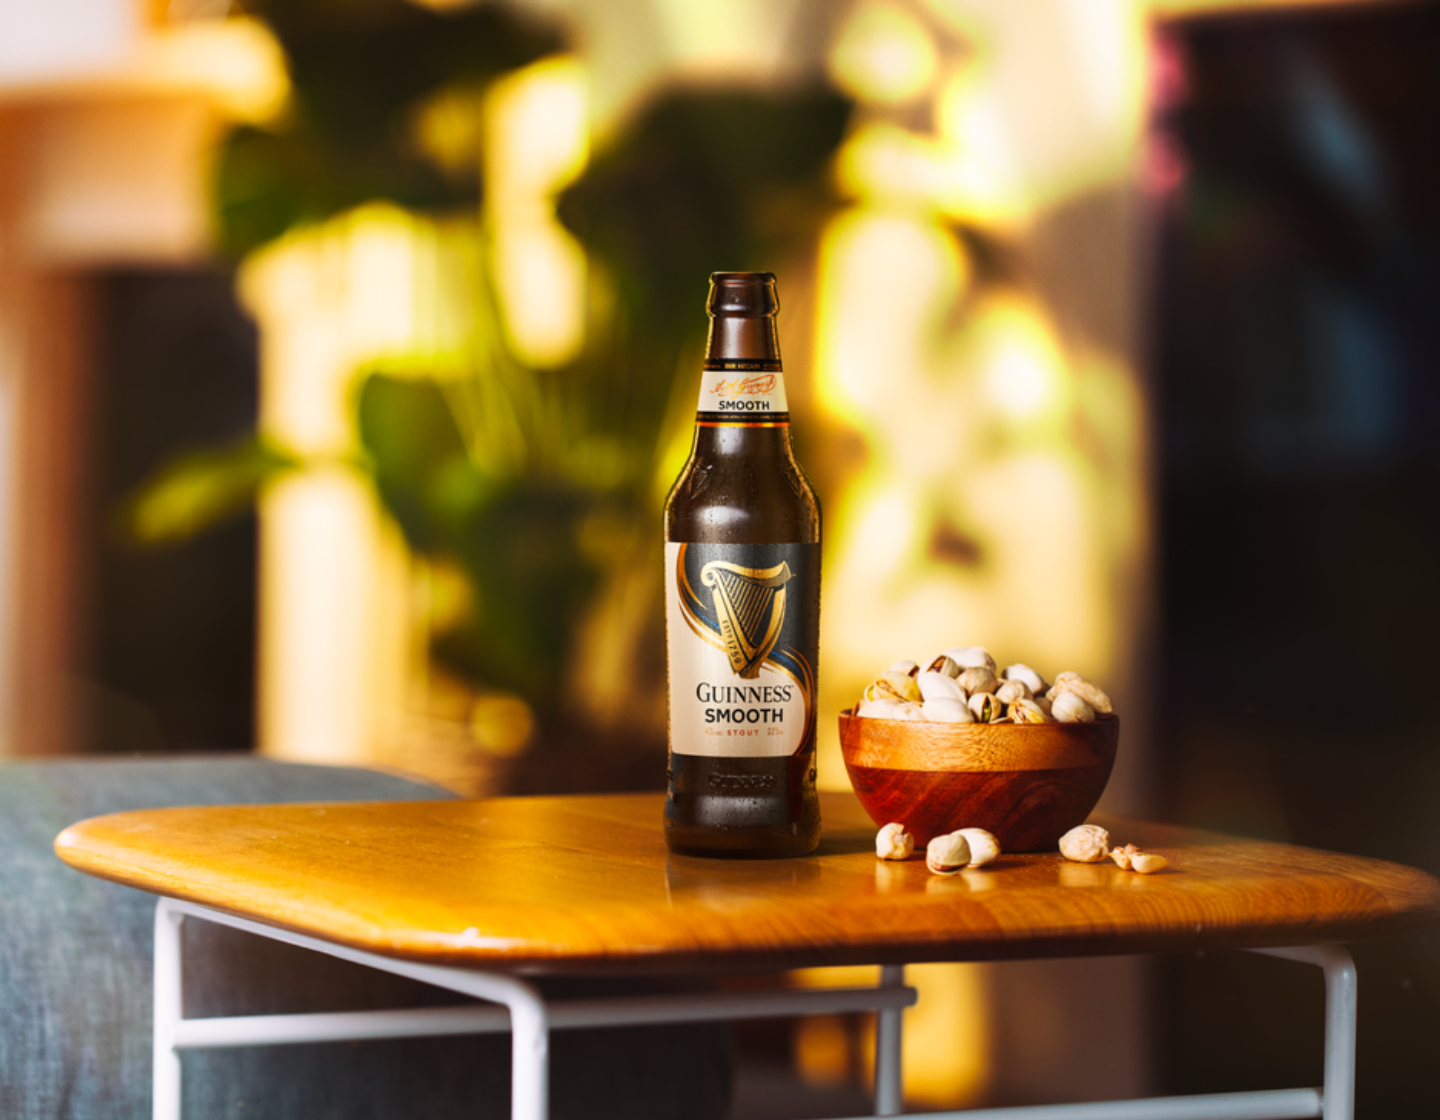 Botellín de Guinness Smooth sobre una mesa junto a un bol de palomitas 